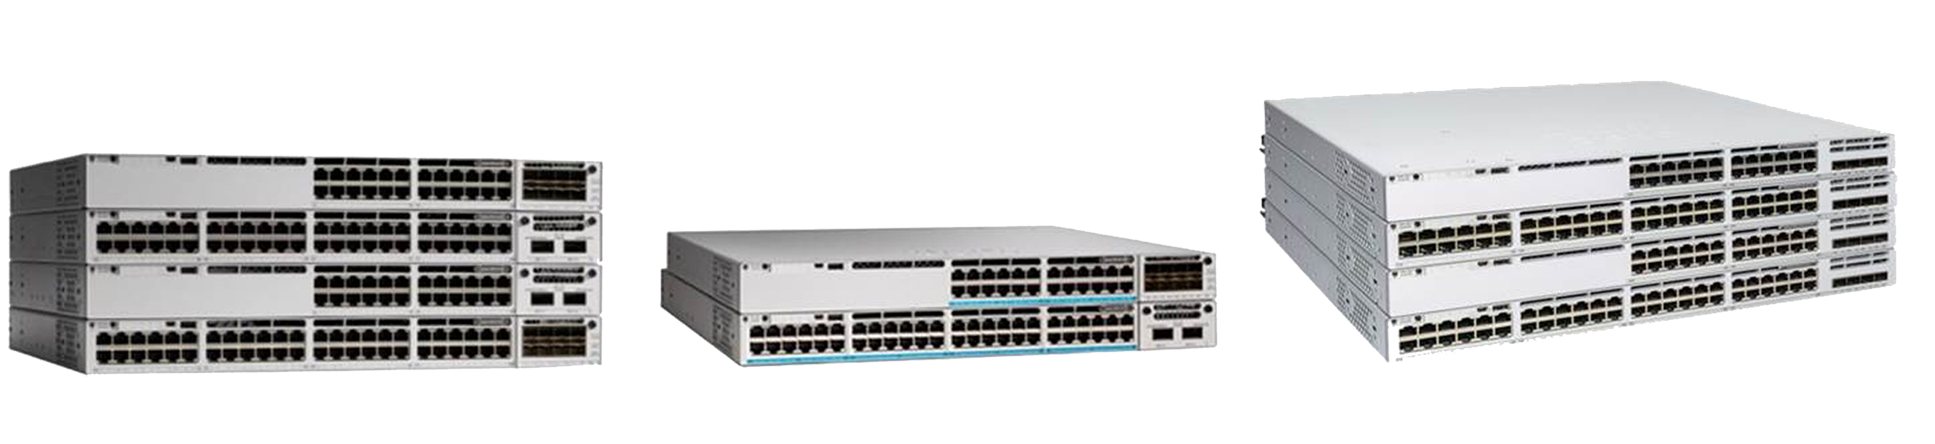 Cisco Catalyst 9300 Series switches